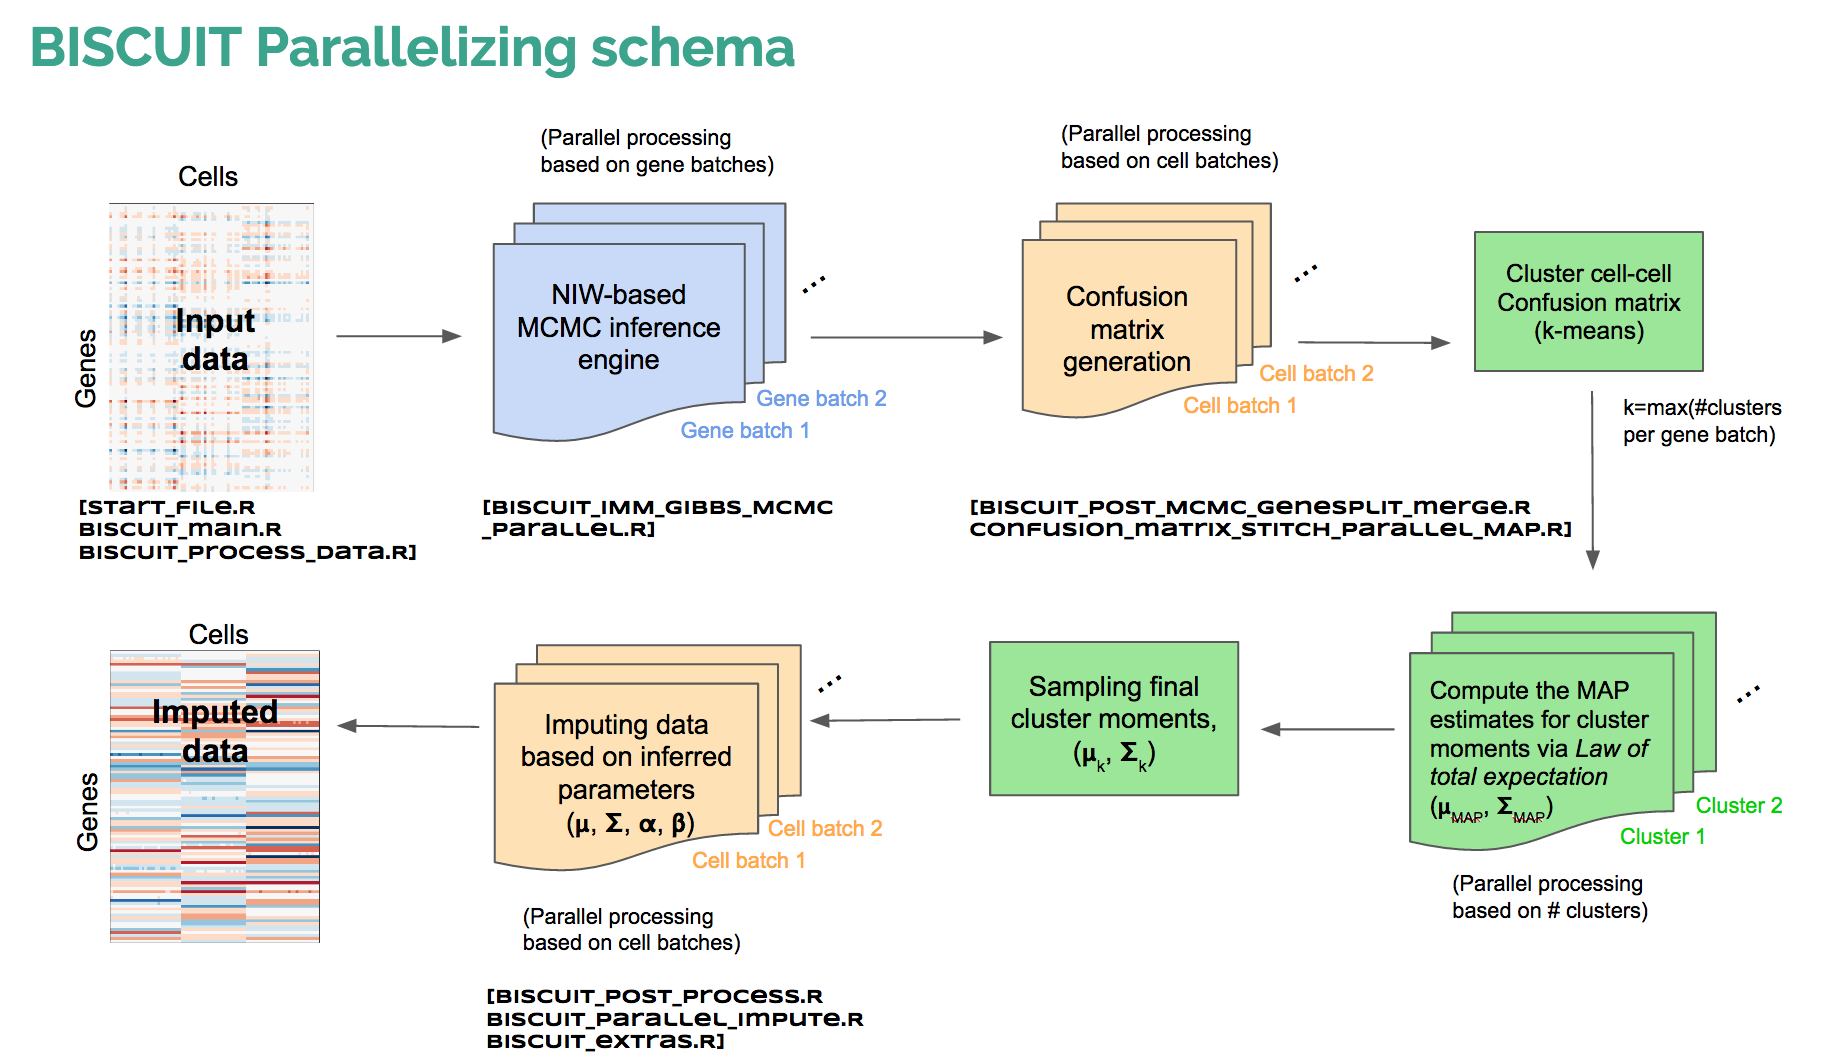 BISCUIT_parallelizing_schema_codeflow.png